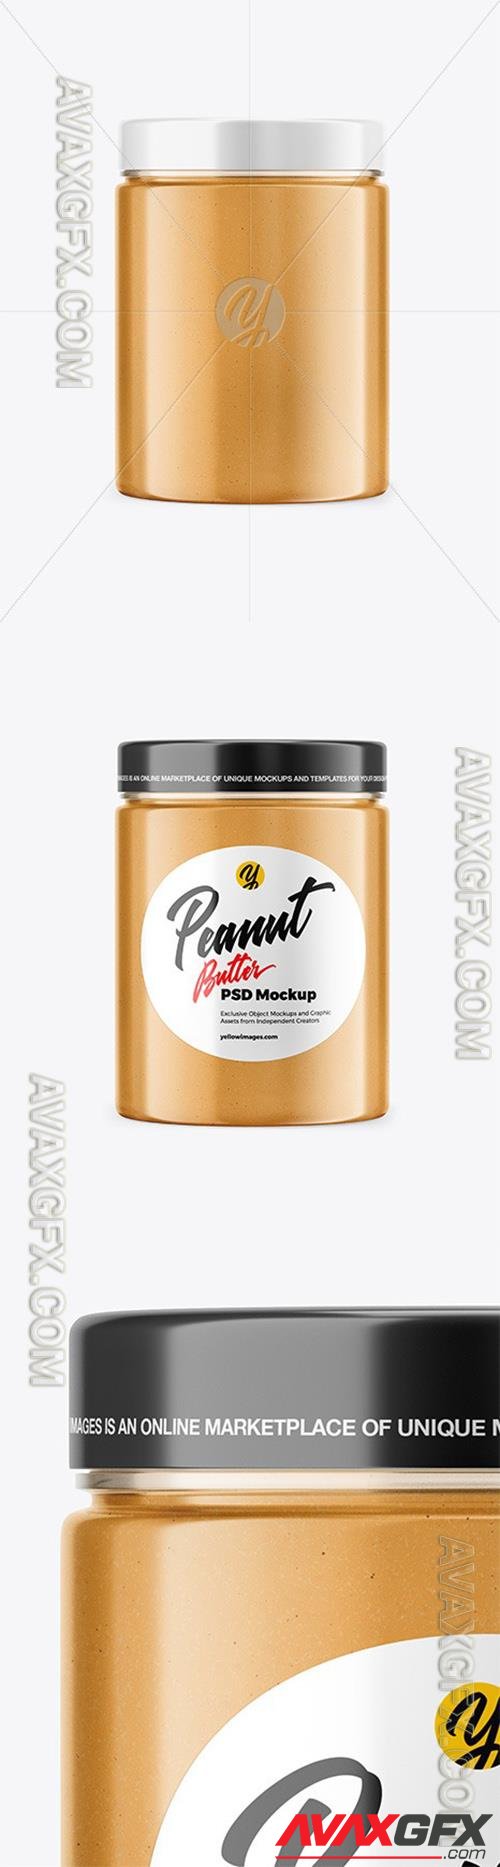 Jar with Peanut Butter Mockup 46896 TIF